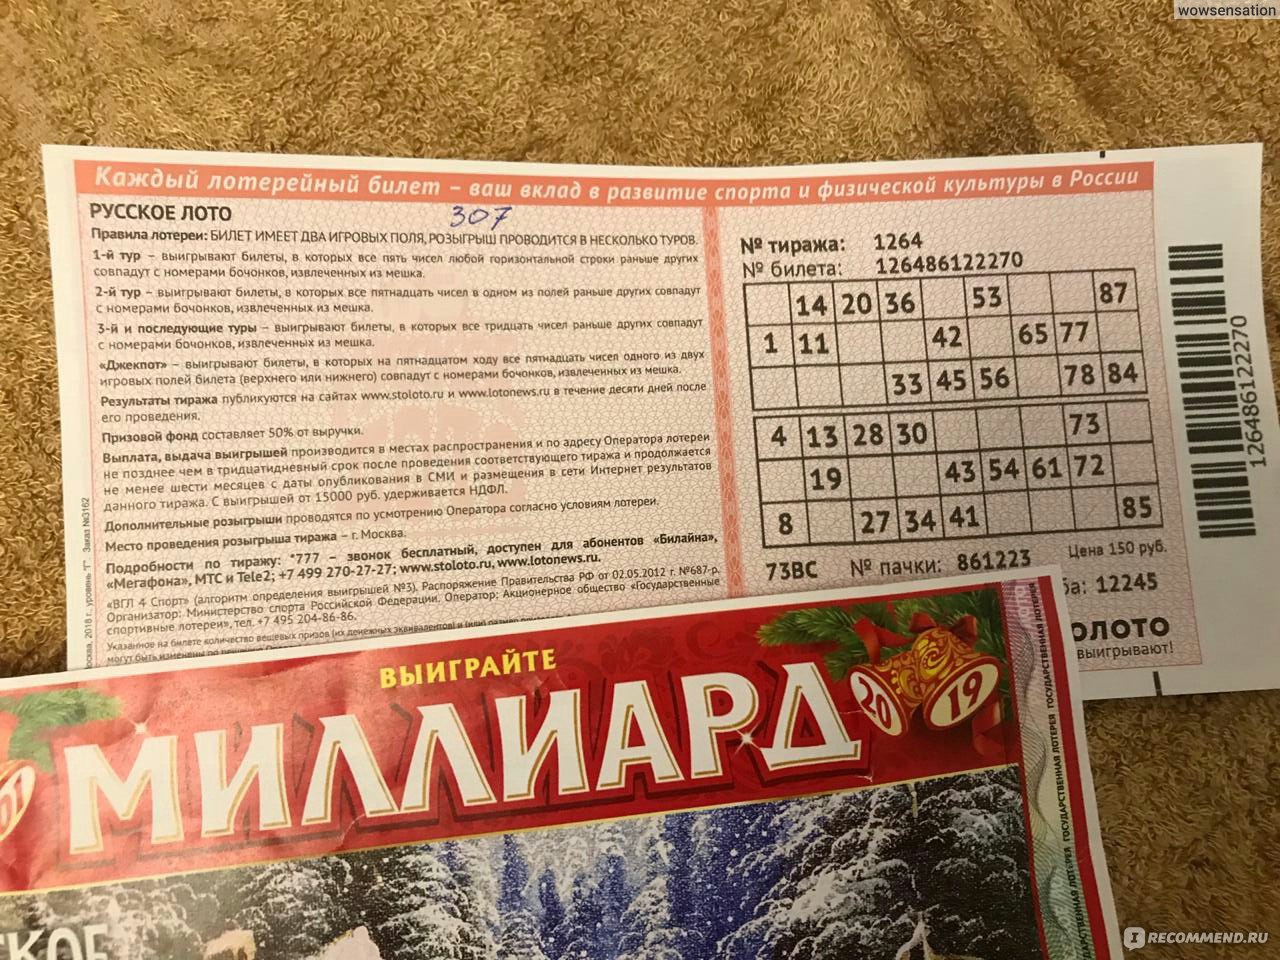 Выигрышные лотереи русское лото. Билет русское лото билет. Лотерейный билет русское лото. Выигрышный билет русское лото. Номер билета русское лото.